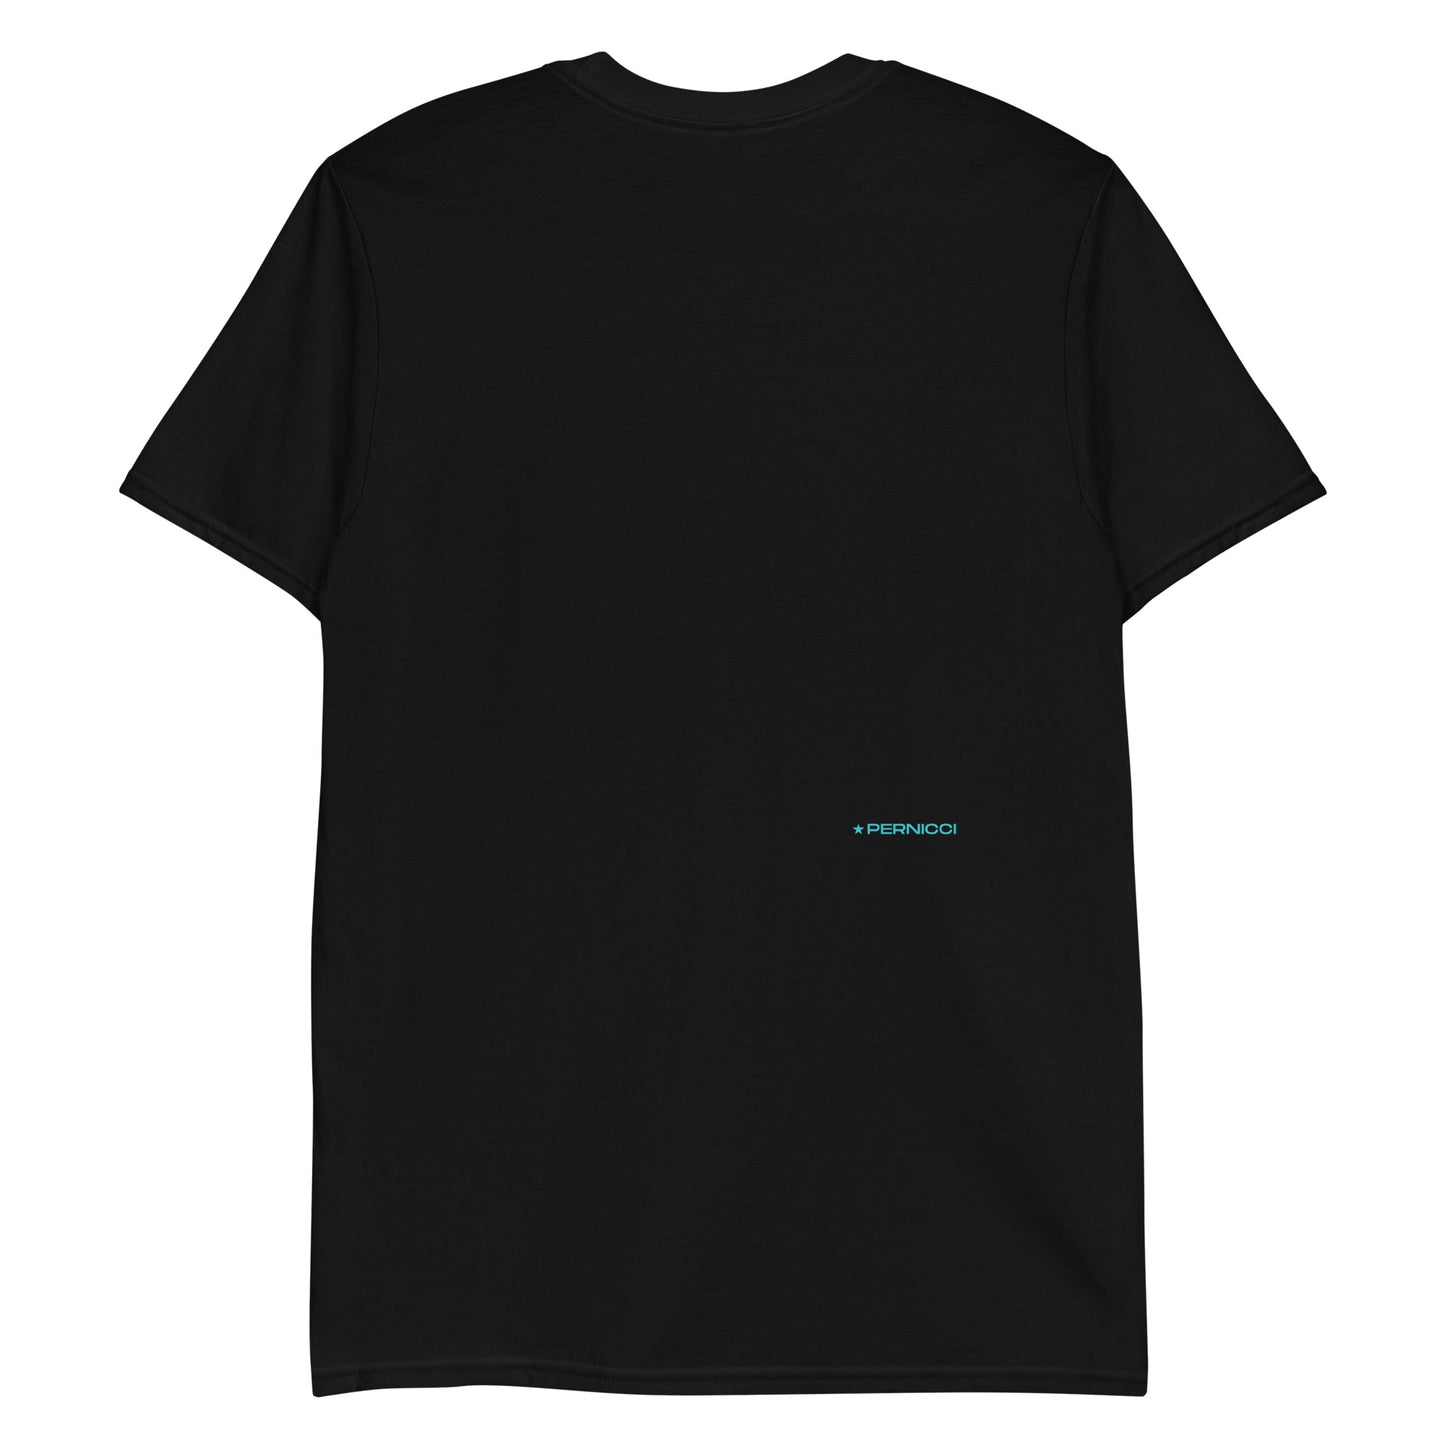 T-Shirt CA Frame5